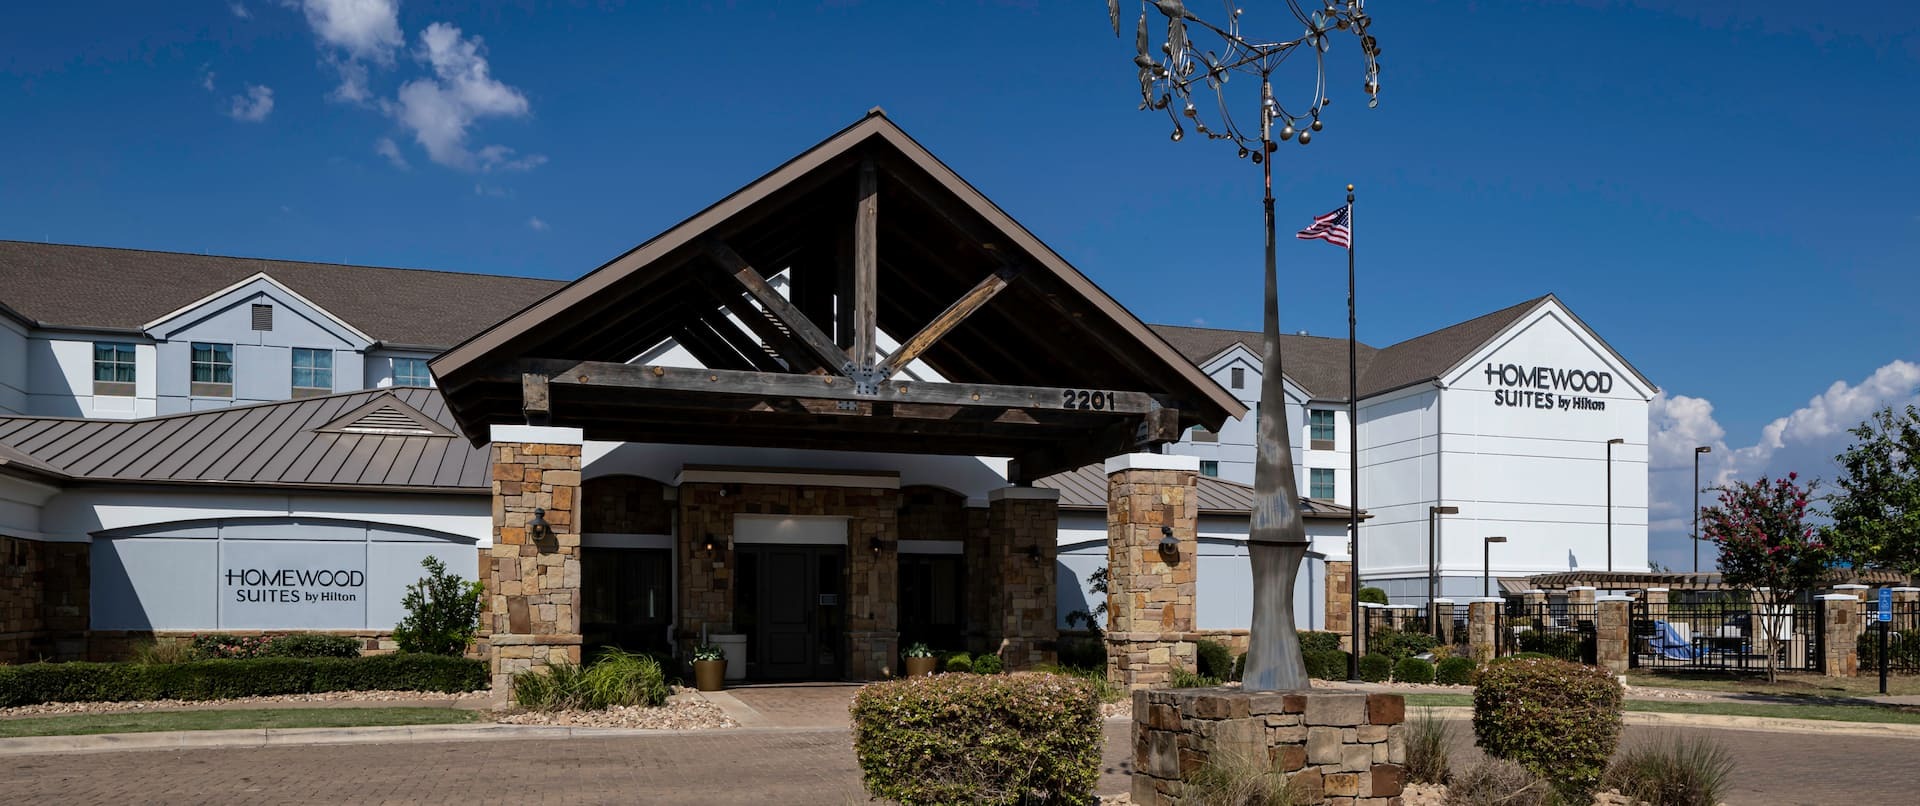 Photo of Homewood Suites by Hilton Austin/Round Rock, TX, Round Rock, TX